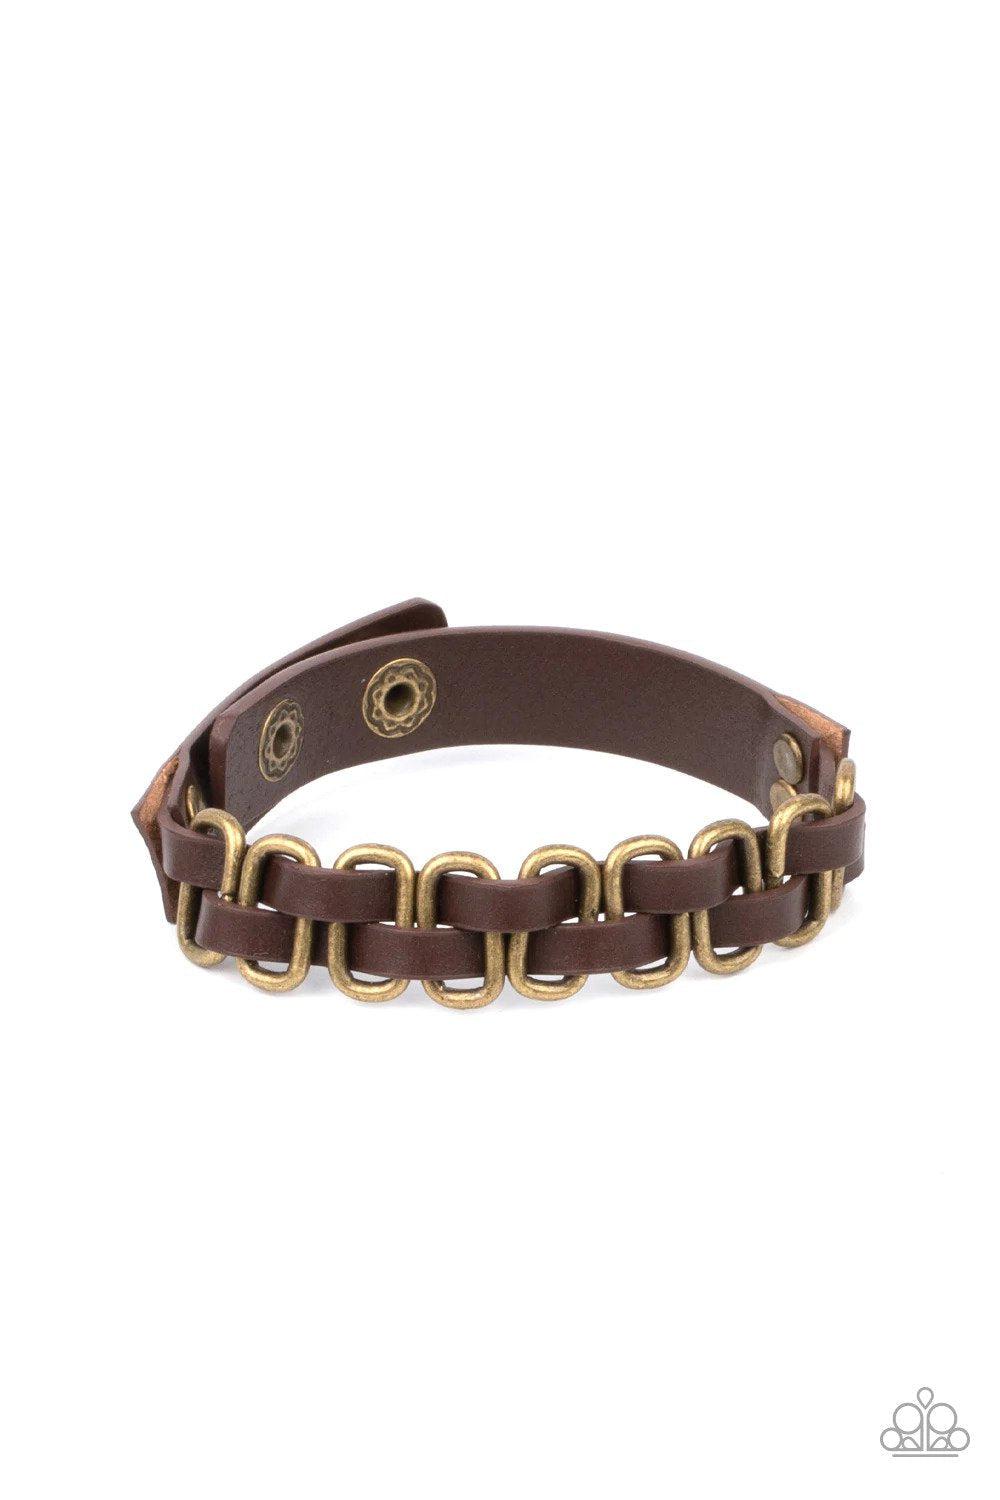 Gone Rogue Brass Bracelet - Paparazzi Accessories- lightbox - CarasShop.com - $5 Jewelry by Cara Jewels